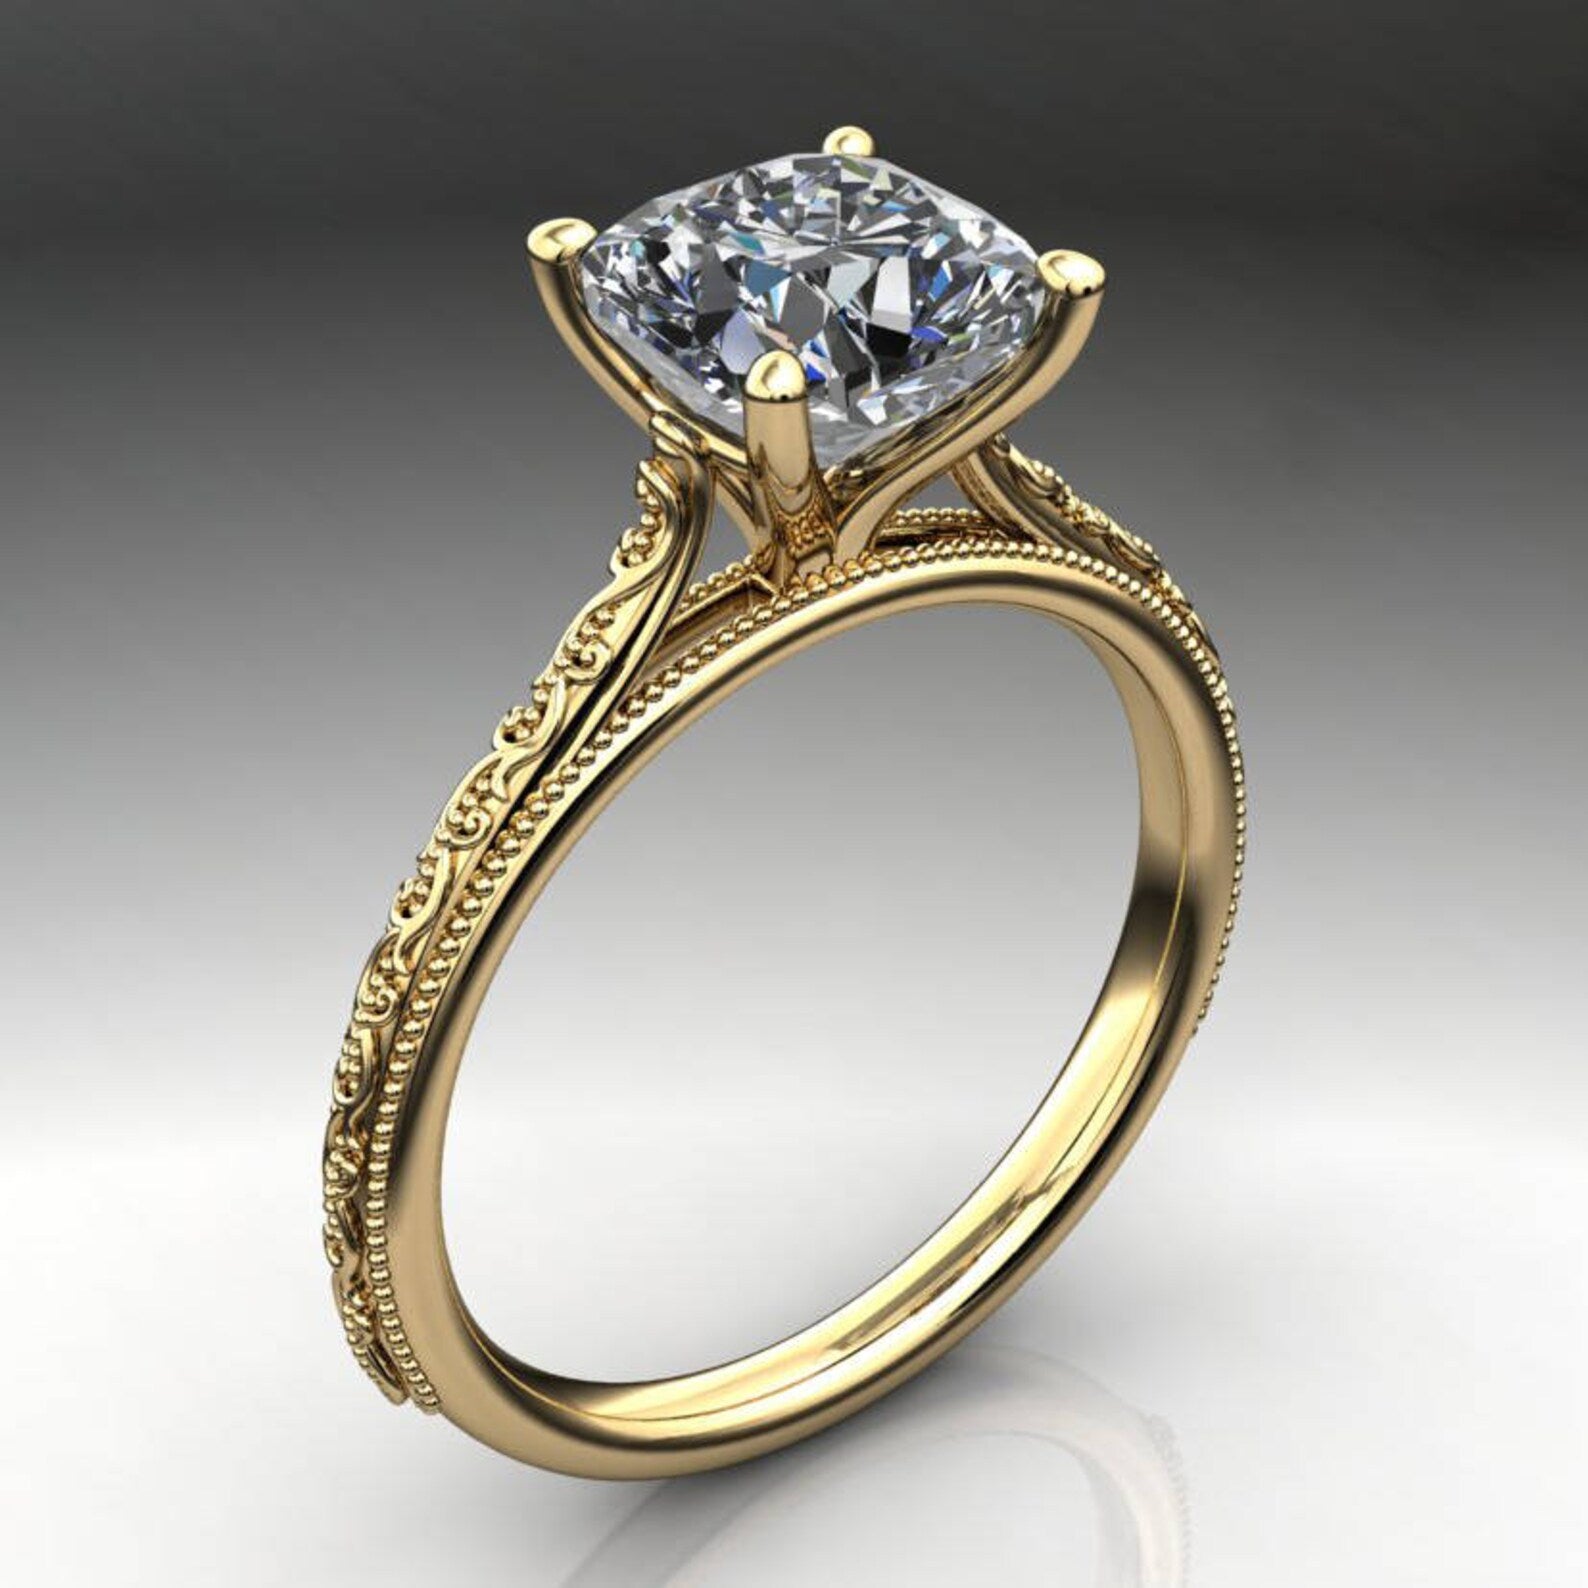 perla ring - 2 carat cushion cut NEO moissanite wedding set, moissanite engagement ring - J Hollywood Designs